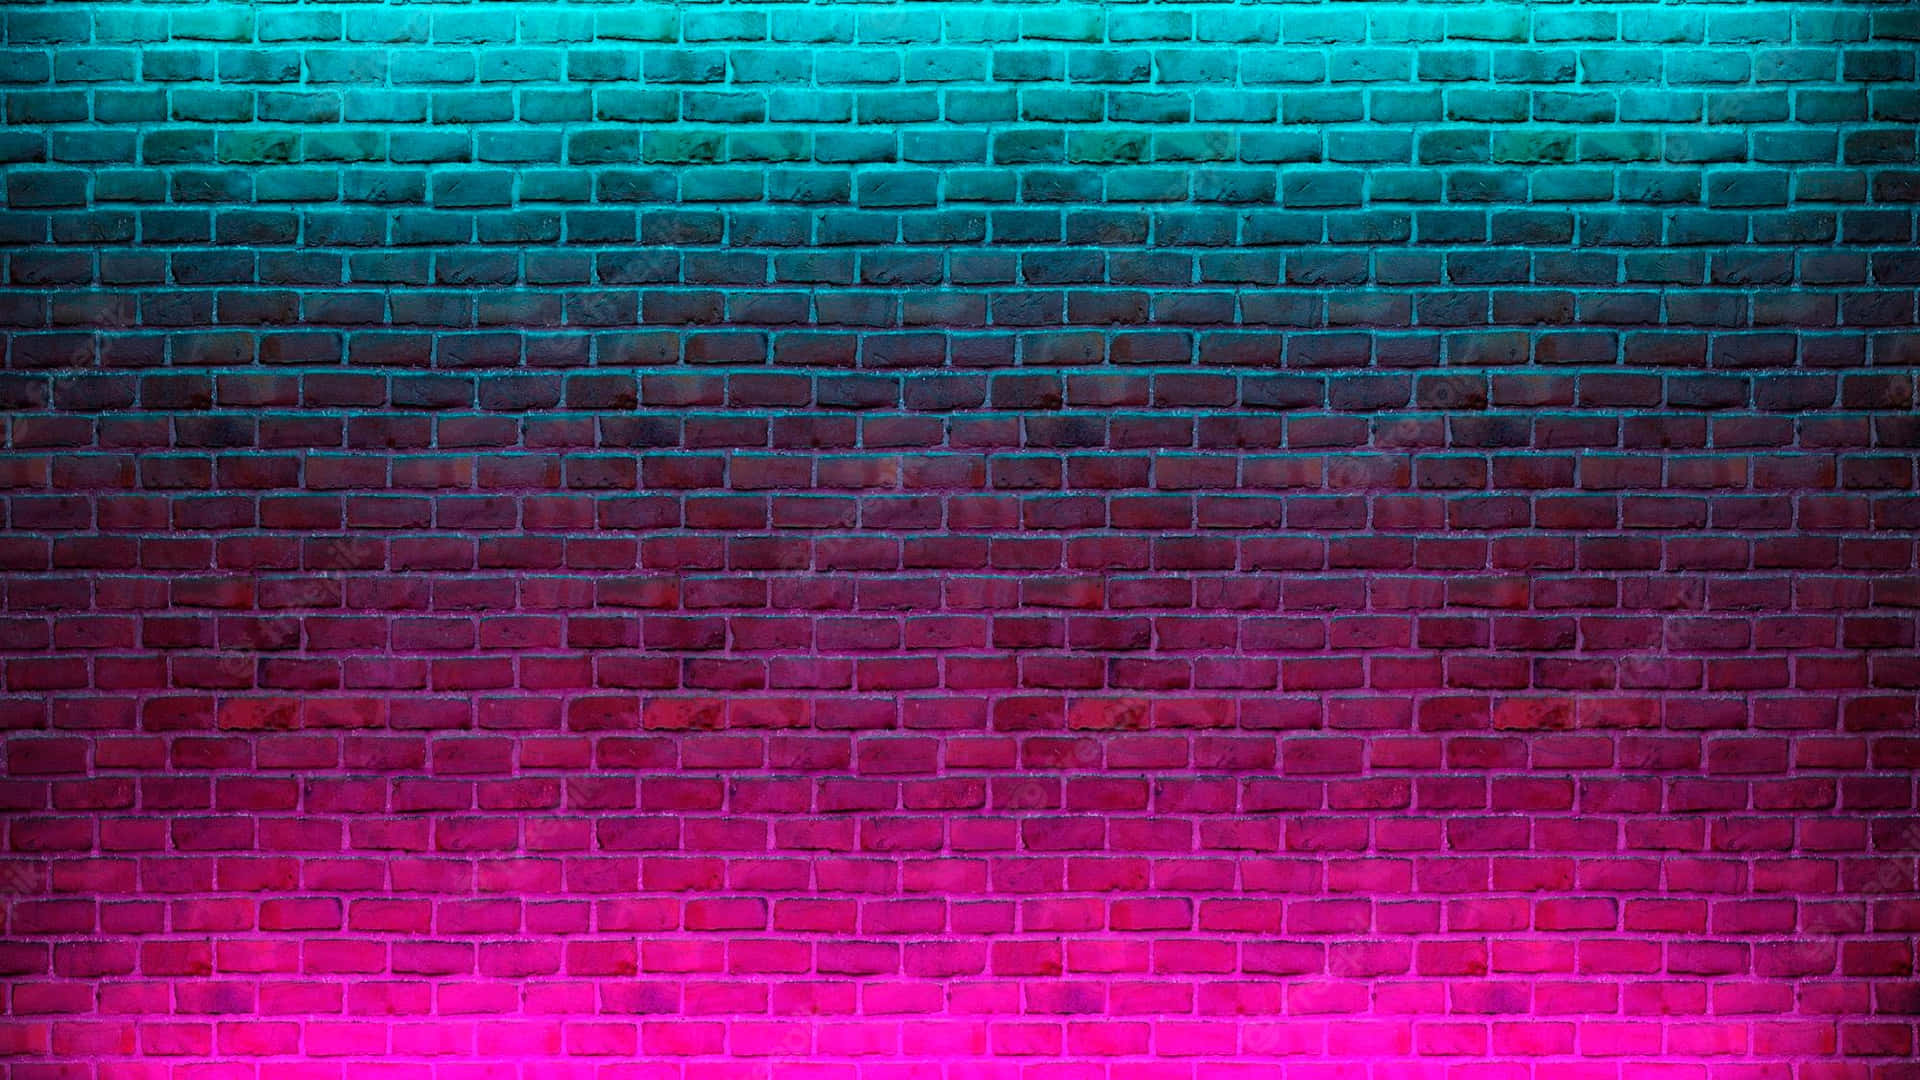 Neon Lights in Aesthetic Grunge Style Wallpaper